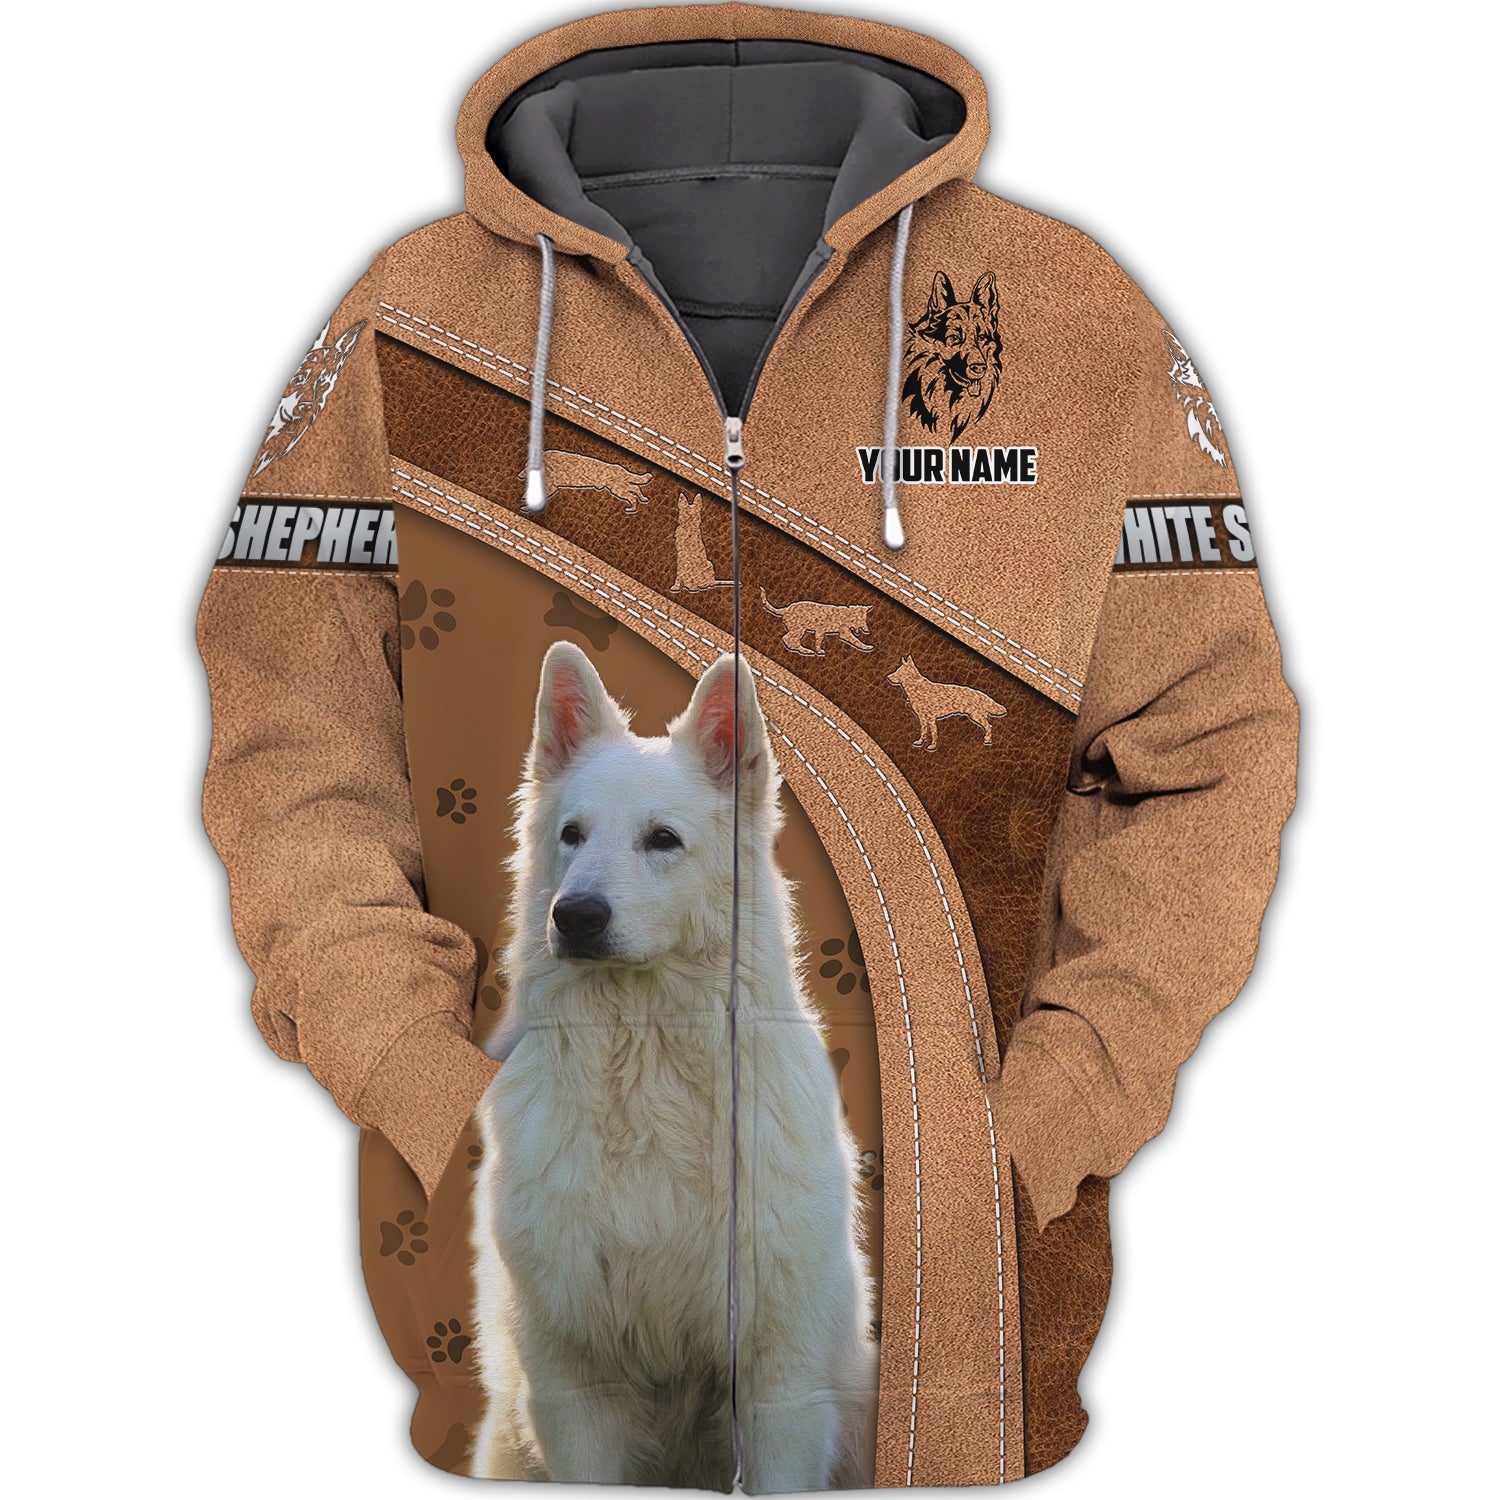 White Shepherd - Personalized Name 3D Zipper hoodie - TAD 176